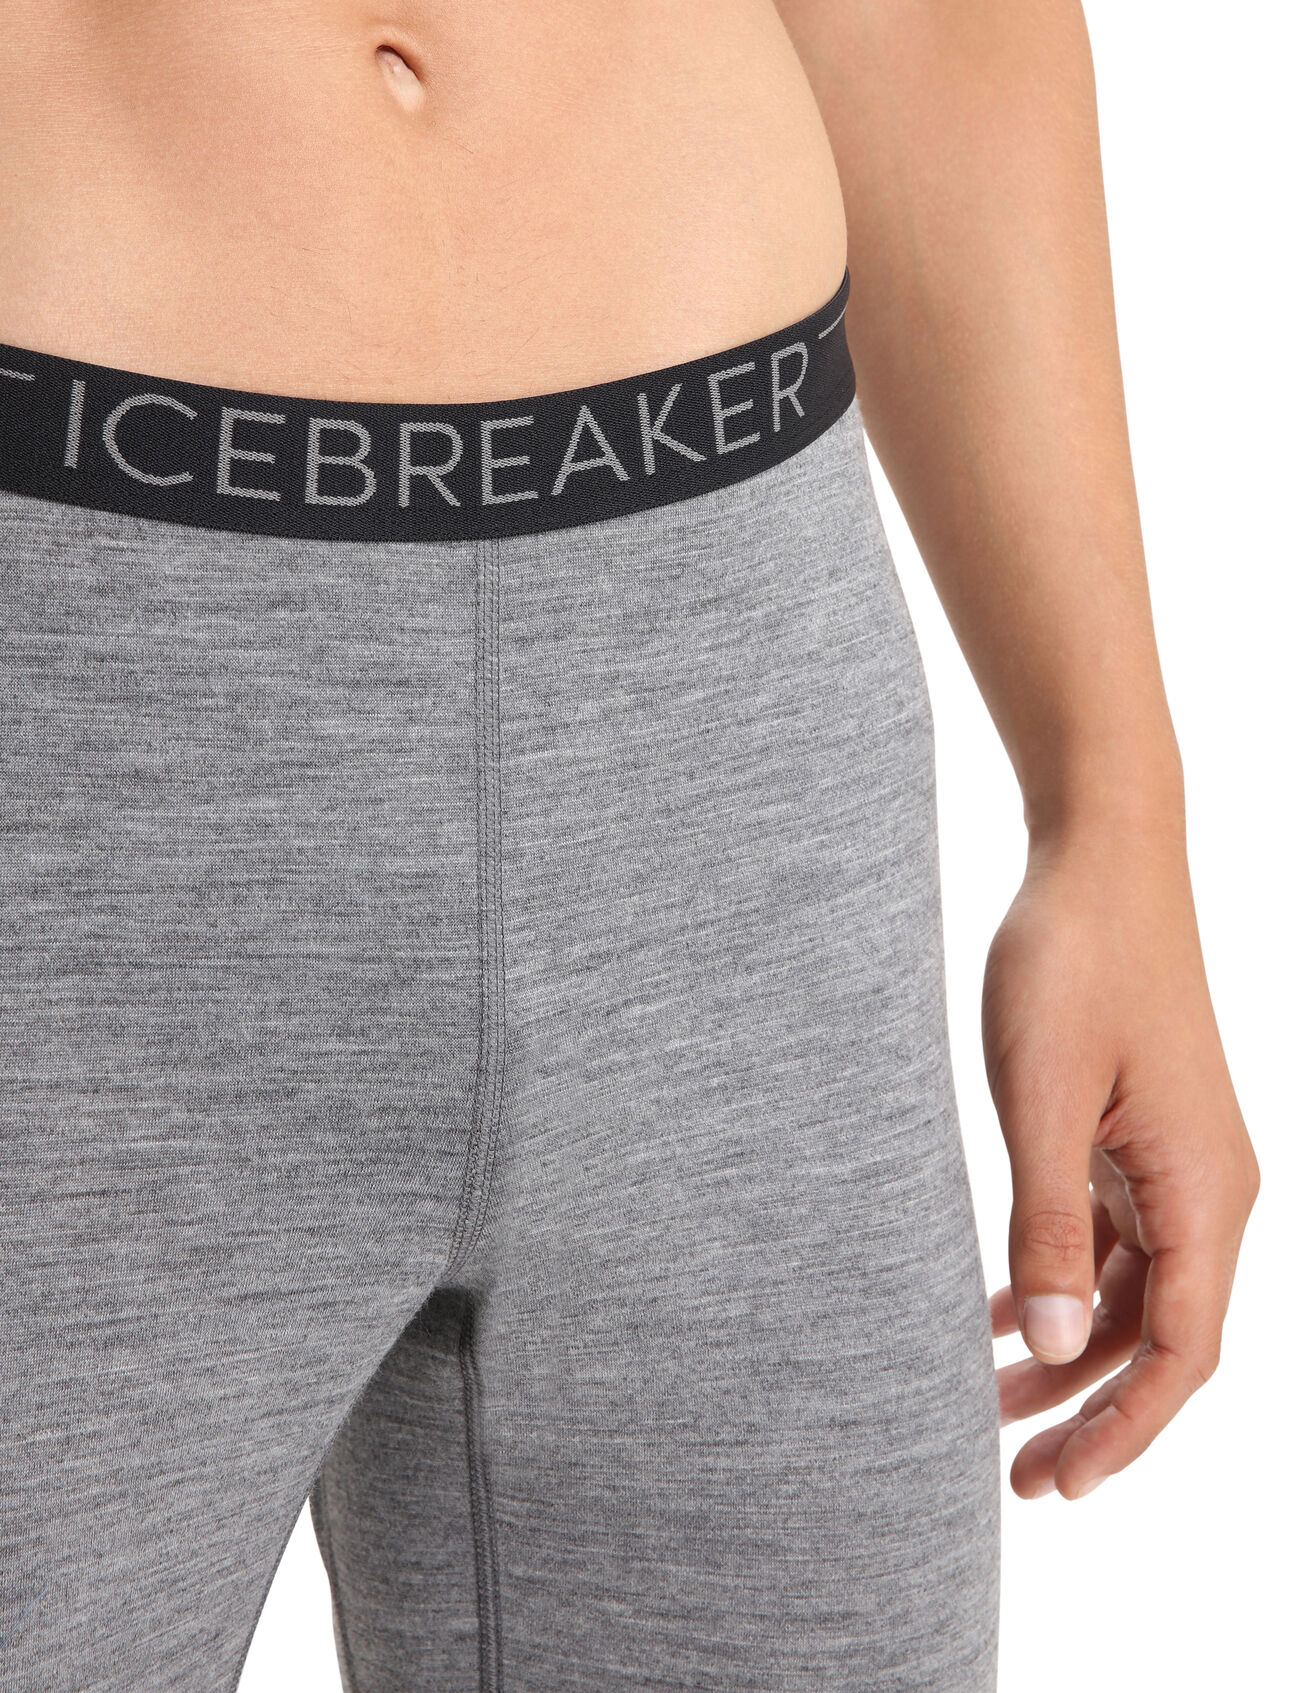 Buy Icebreaker 200 Oasis Leggings Baselayer Pants online at Sport